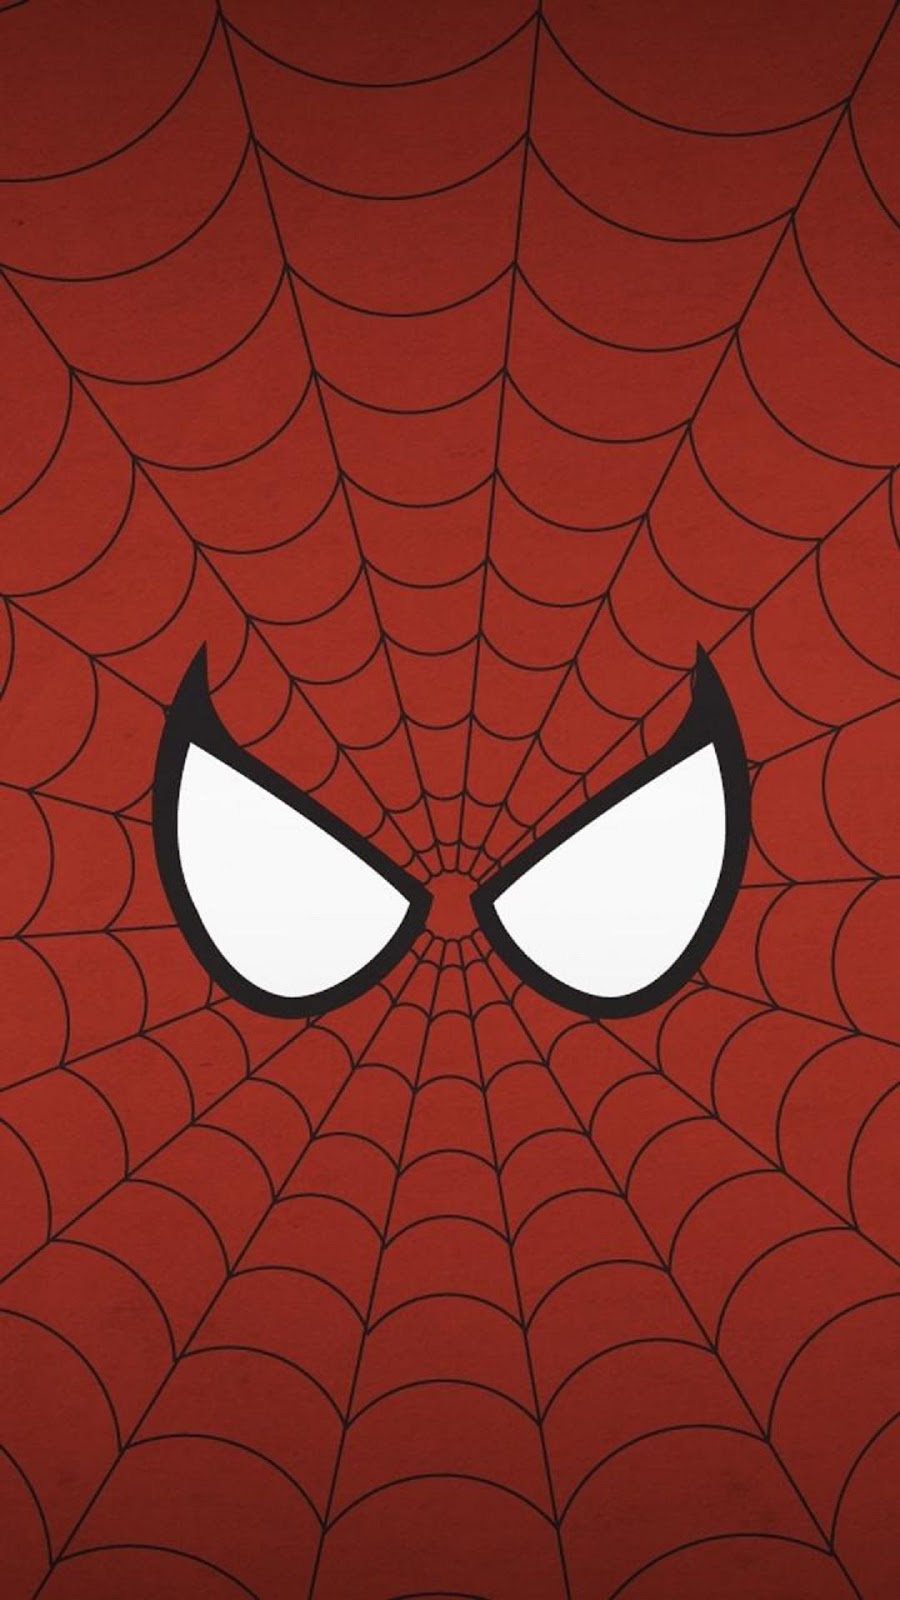 Spiderman%2BEyes%2BIllustration%2BLG%2BAndroid%2BWallpaper.jpg